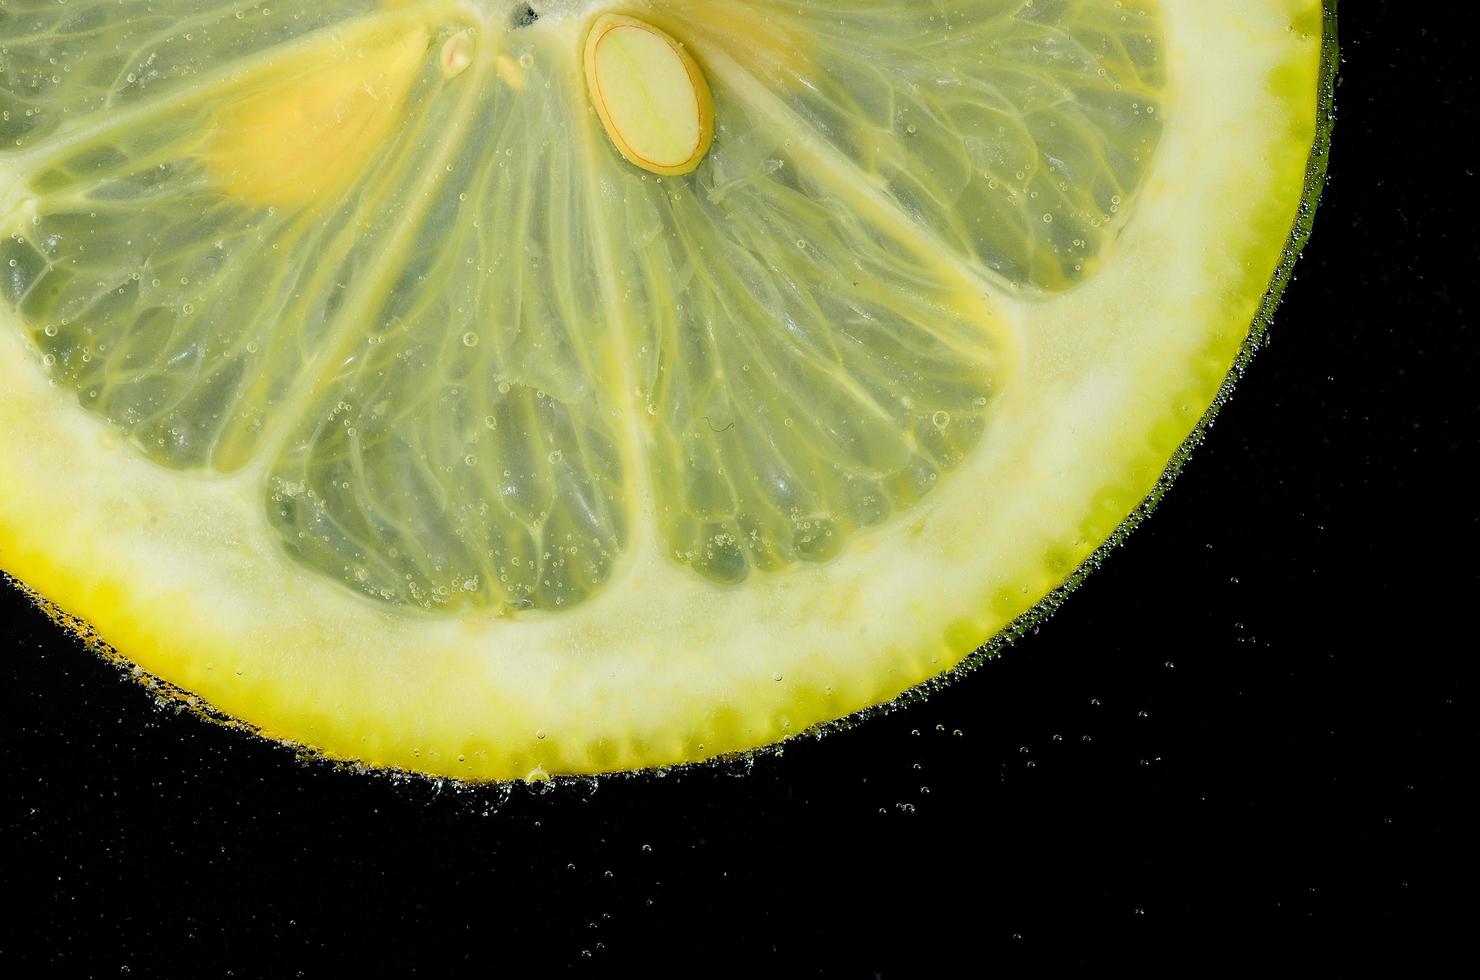 lemon in water bubbles detail photo